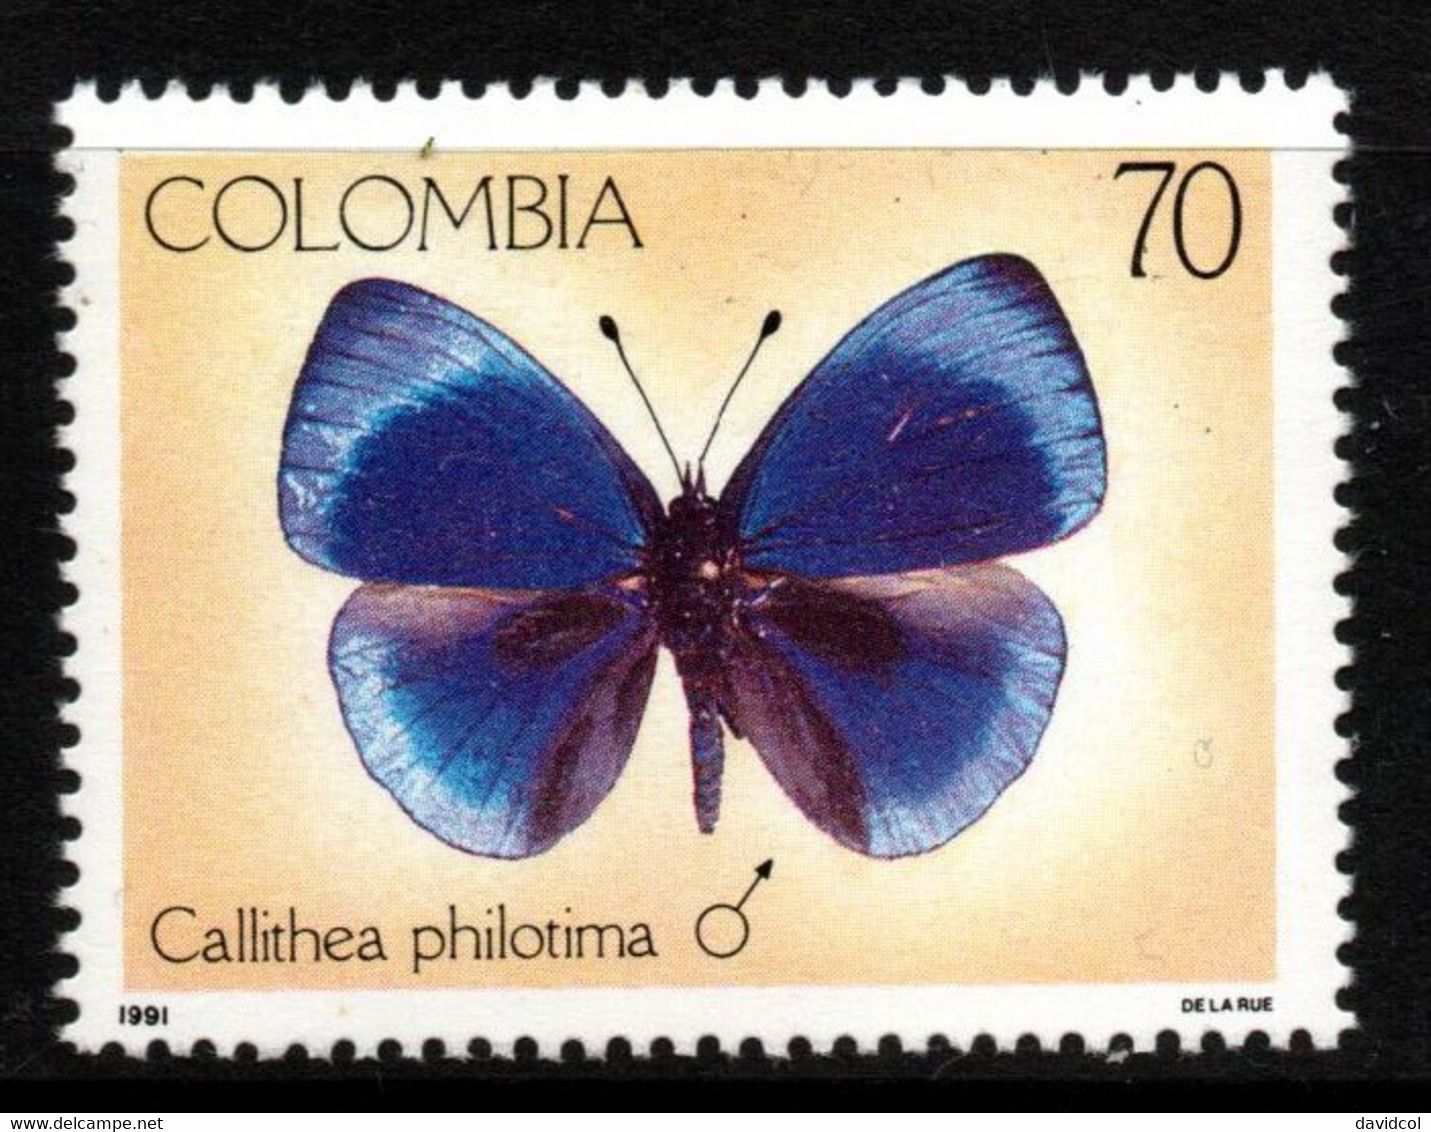 03- KOLUMBIEN - 1991 - MI#:1820 - MNH- BUTTERFLY  (CALLITHEA PHILOTIMA)- INSECTS/FAUNA - Kolumbien